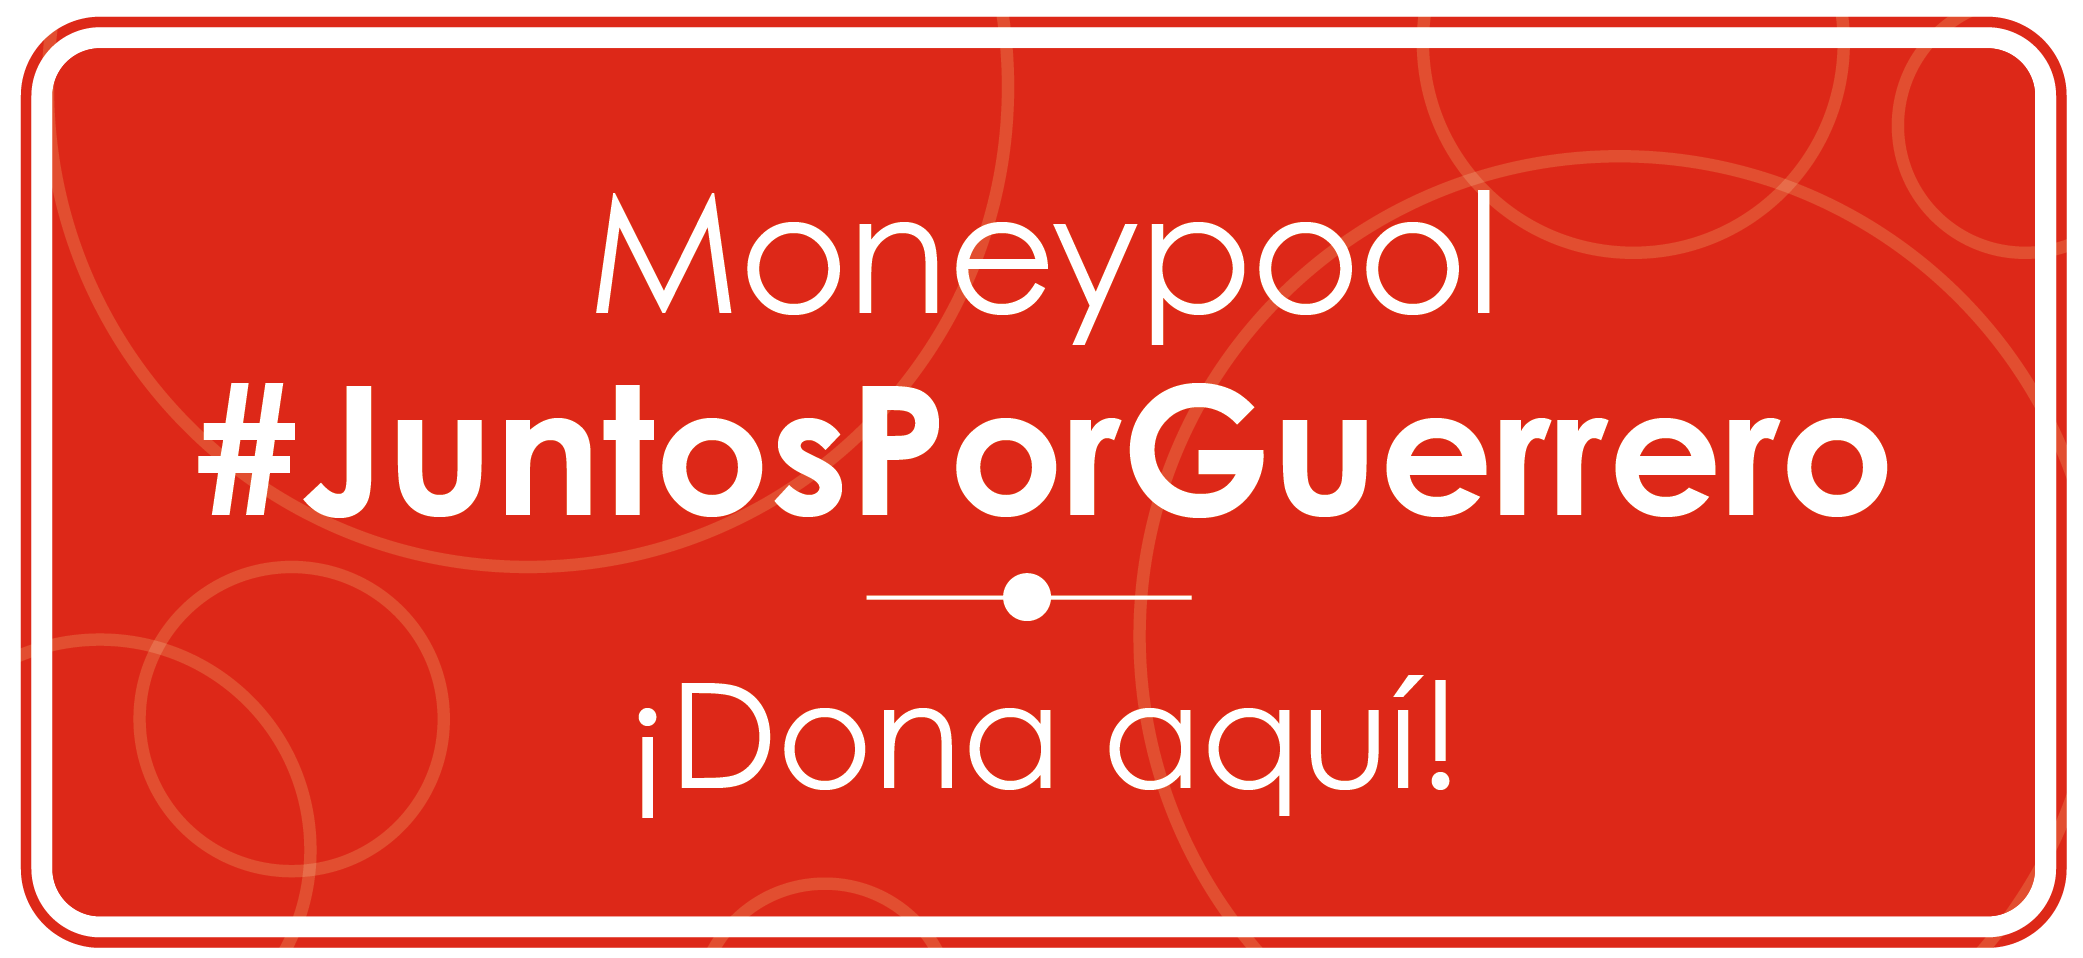 Moneypool-JuntosPorGuerrero